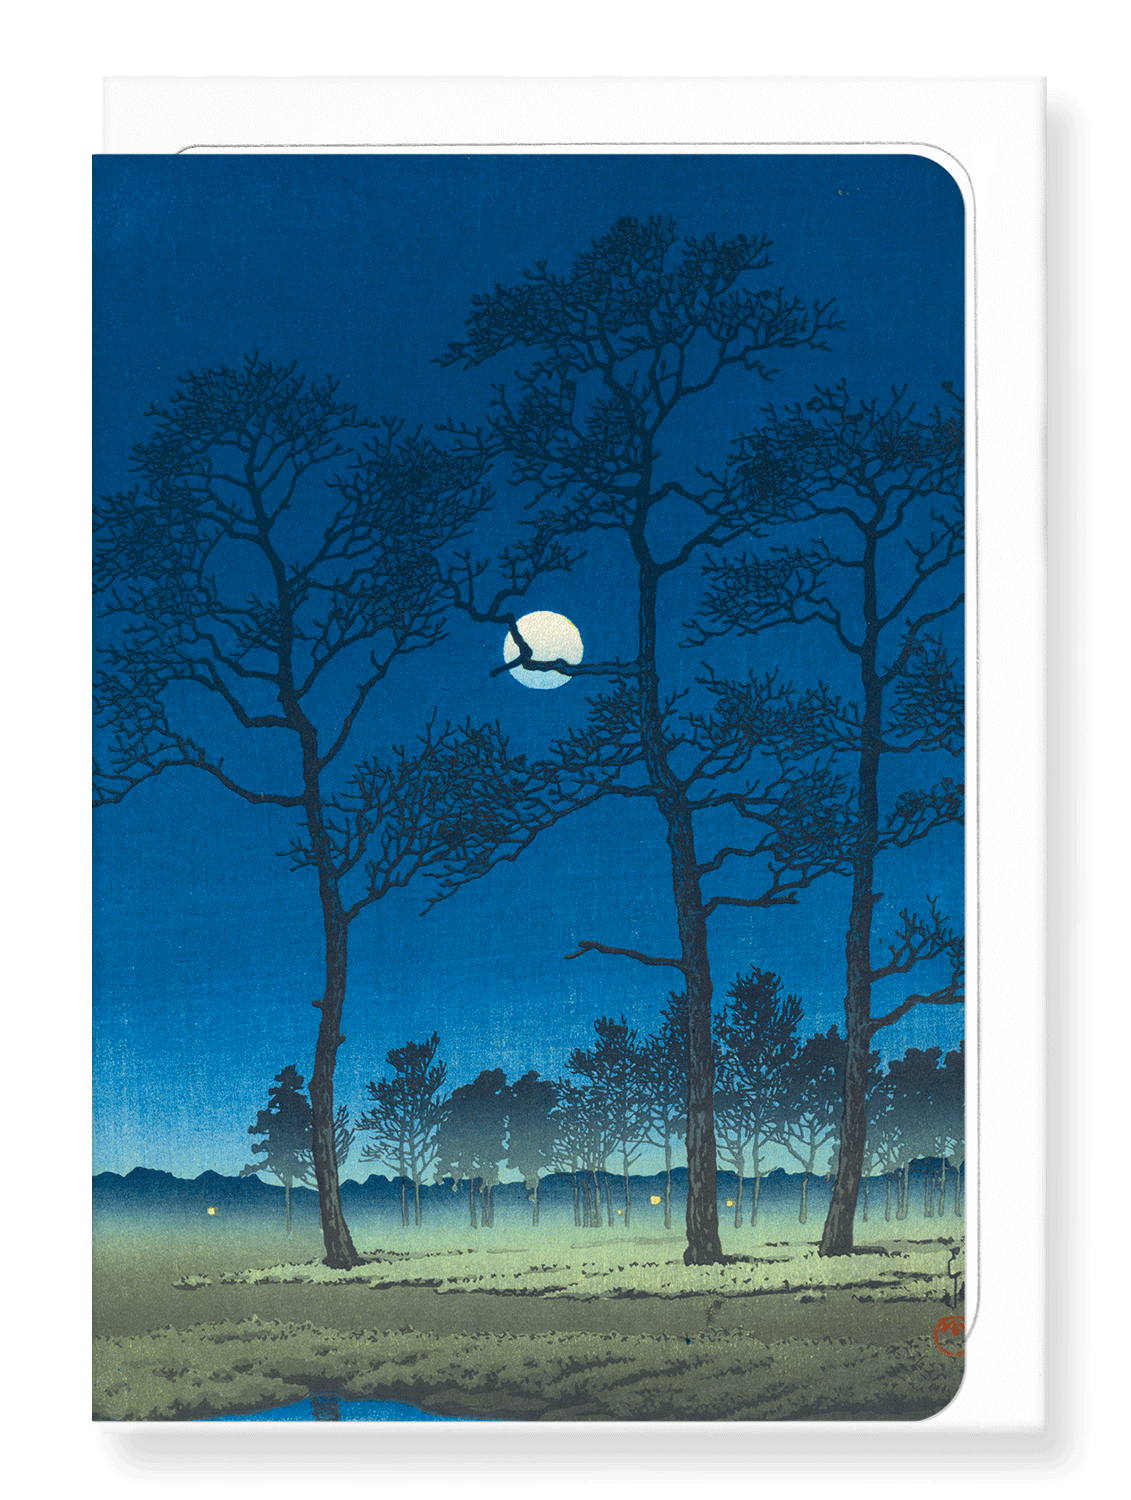 Ezen Designs - Winter moon over toyama plain - Greeting Card - Front